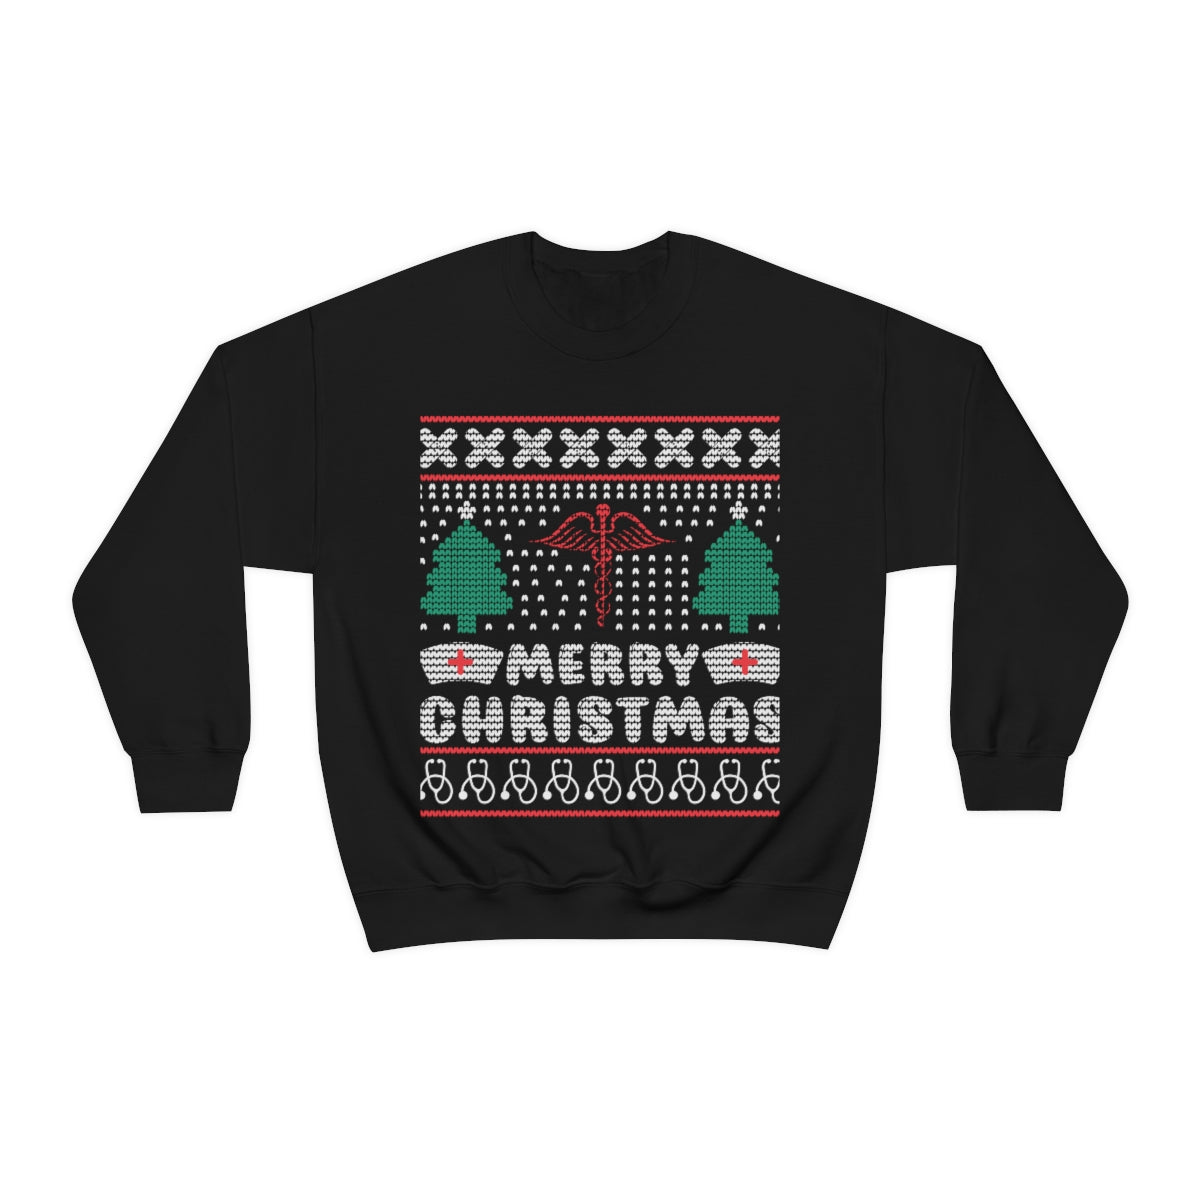 Nurse Ugly Christmas Sweatshirt, Nurse Crewneck Sweatshirt, Gift for Nurses, Cute Funny